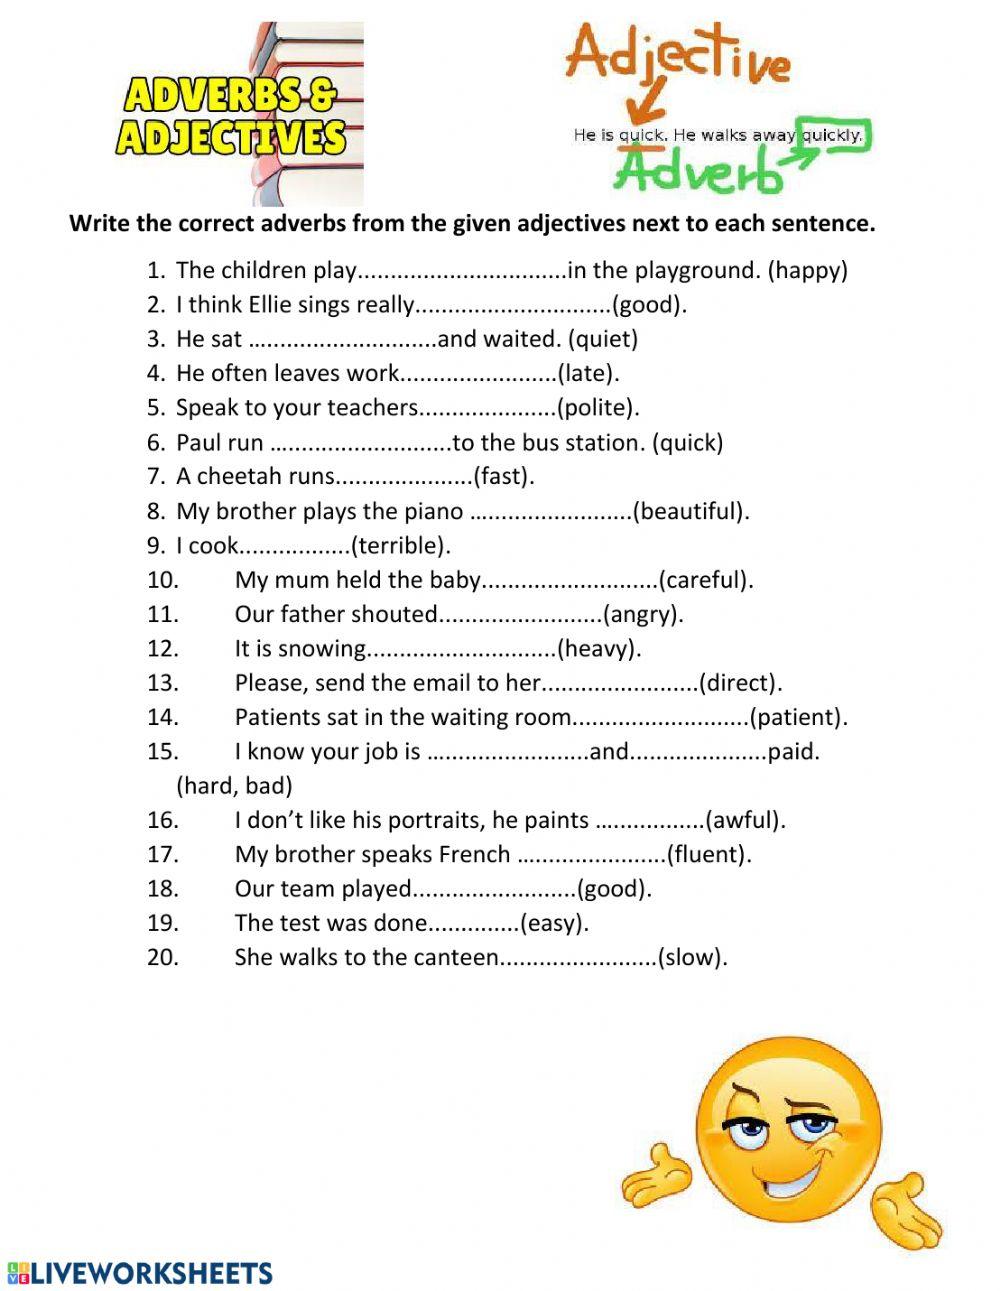 Adjecives-adverbs